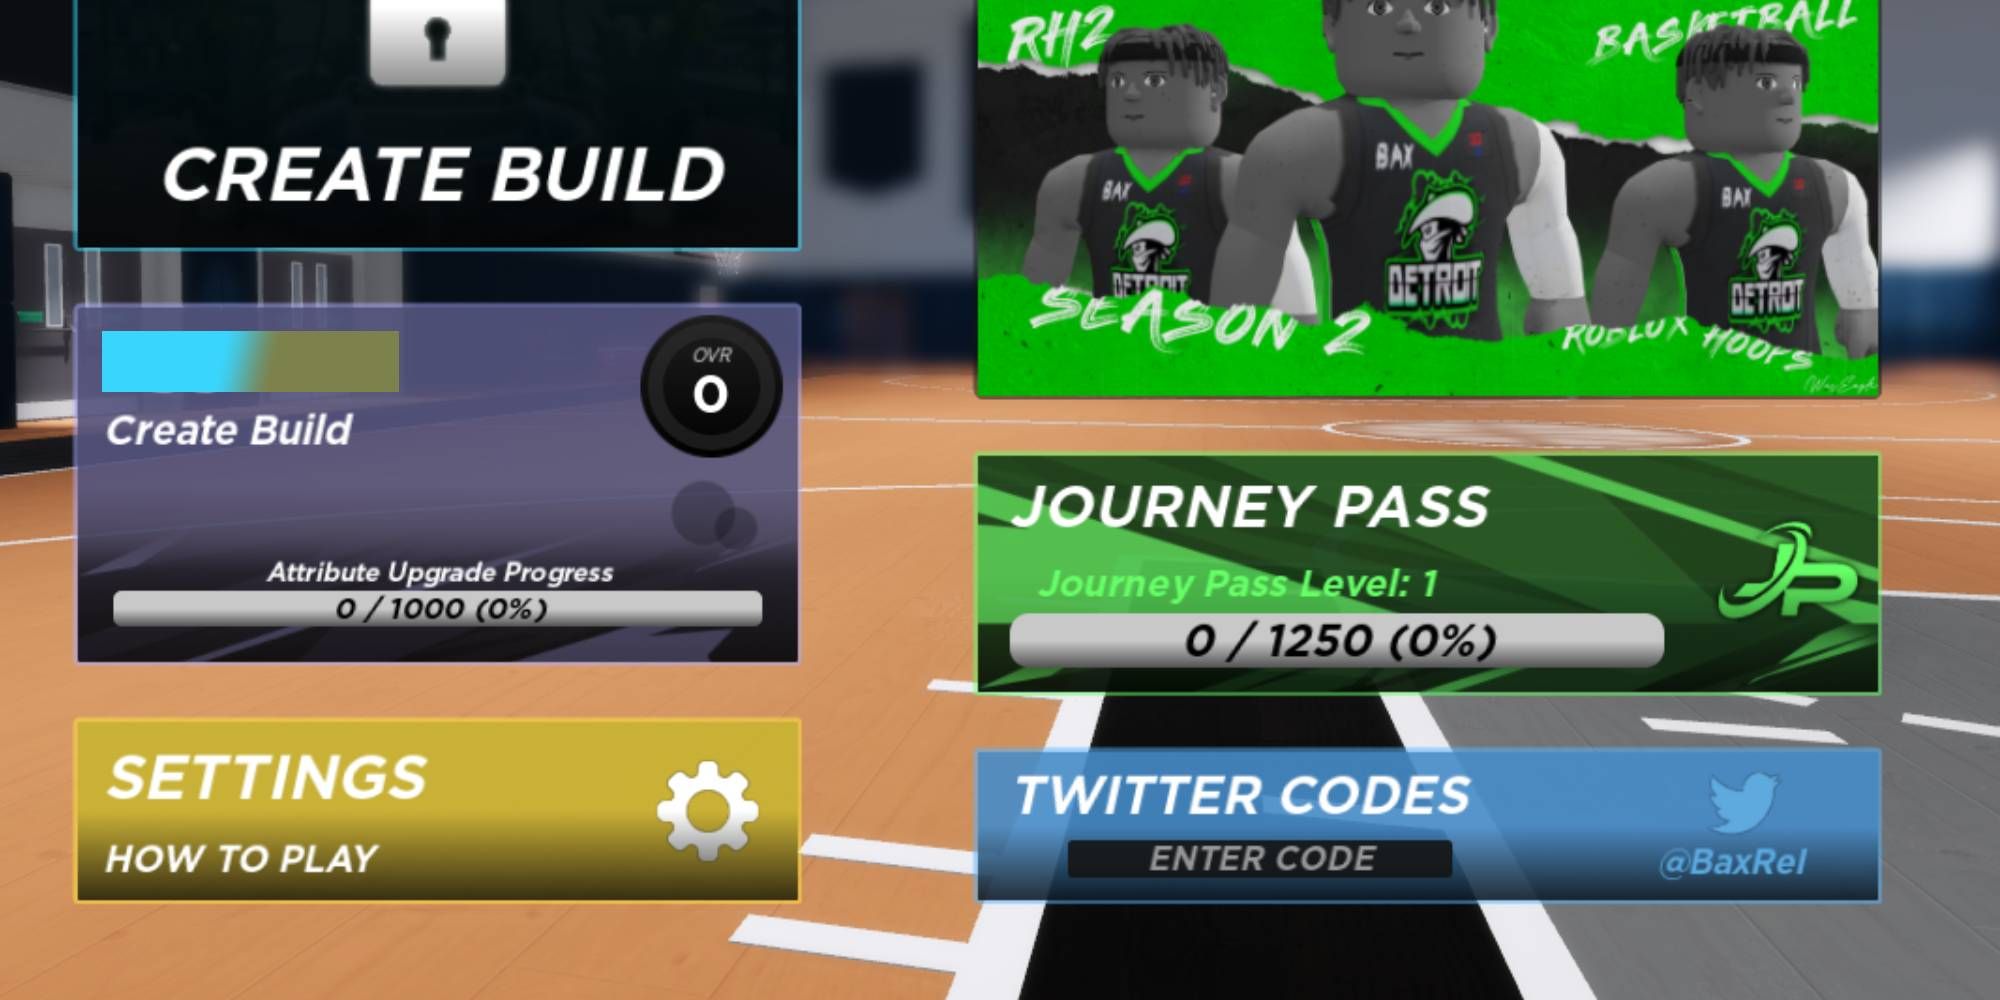 rh2 the journey codes on main menu